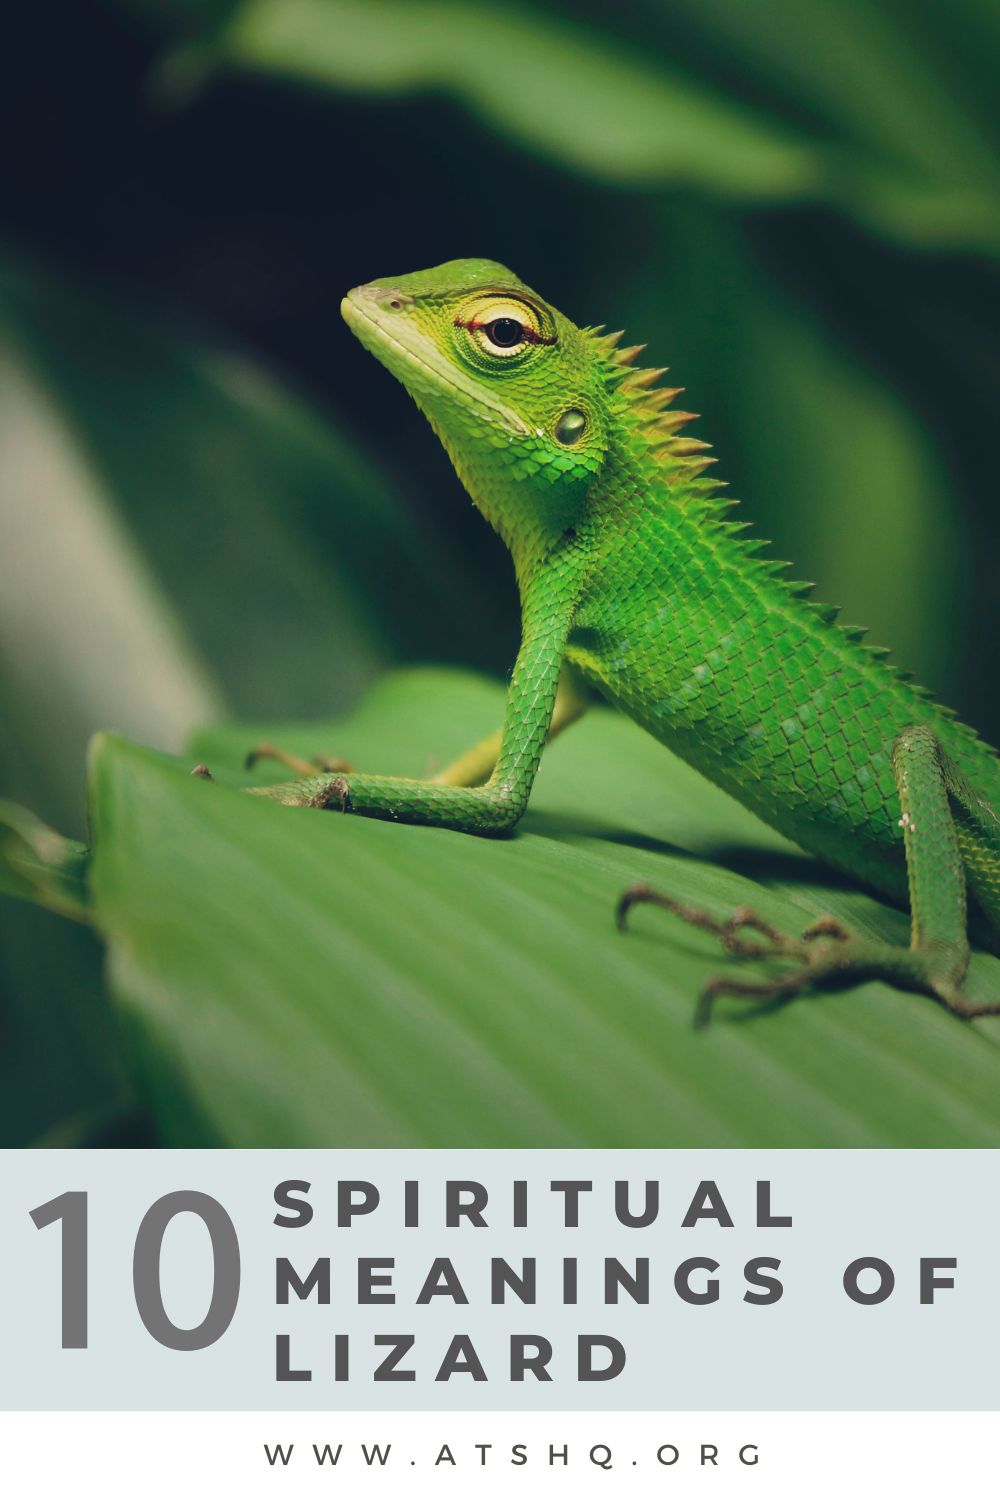 10 Spiritual Meanings of Lizard